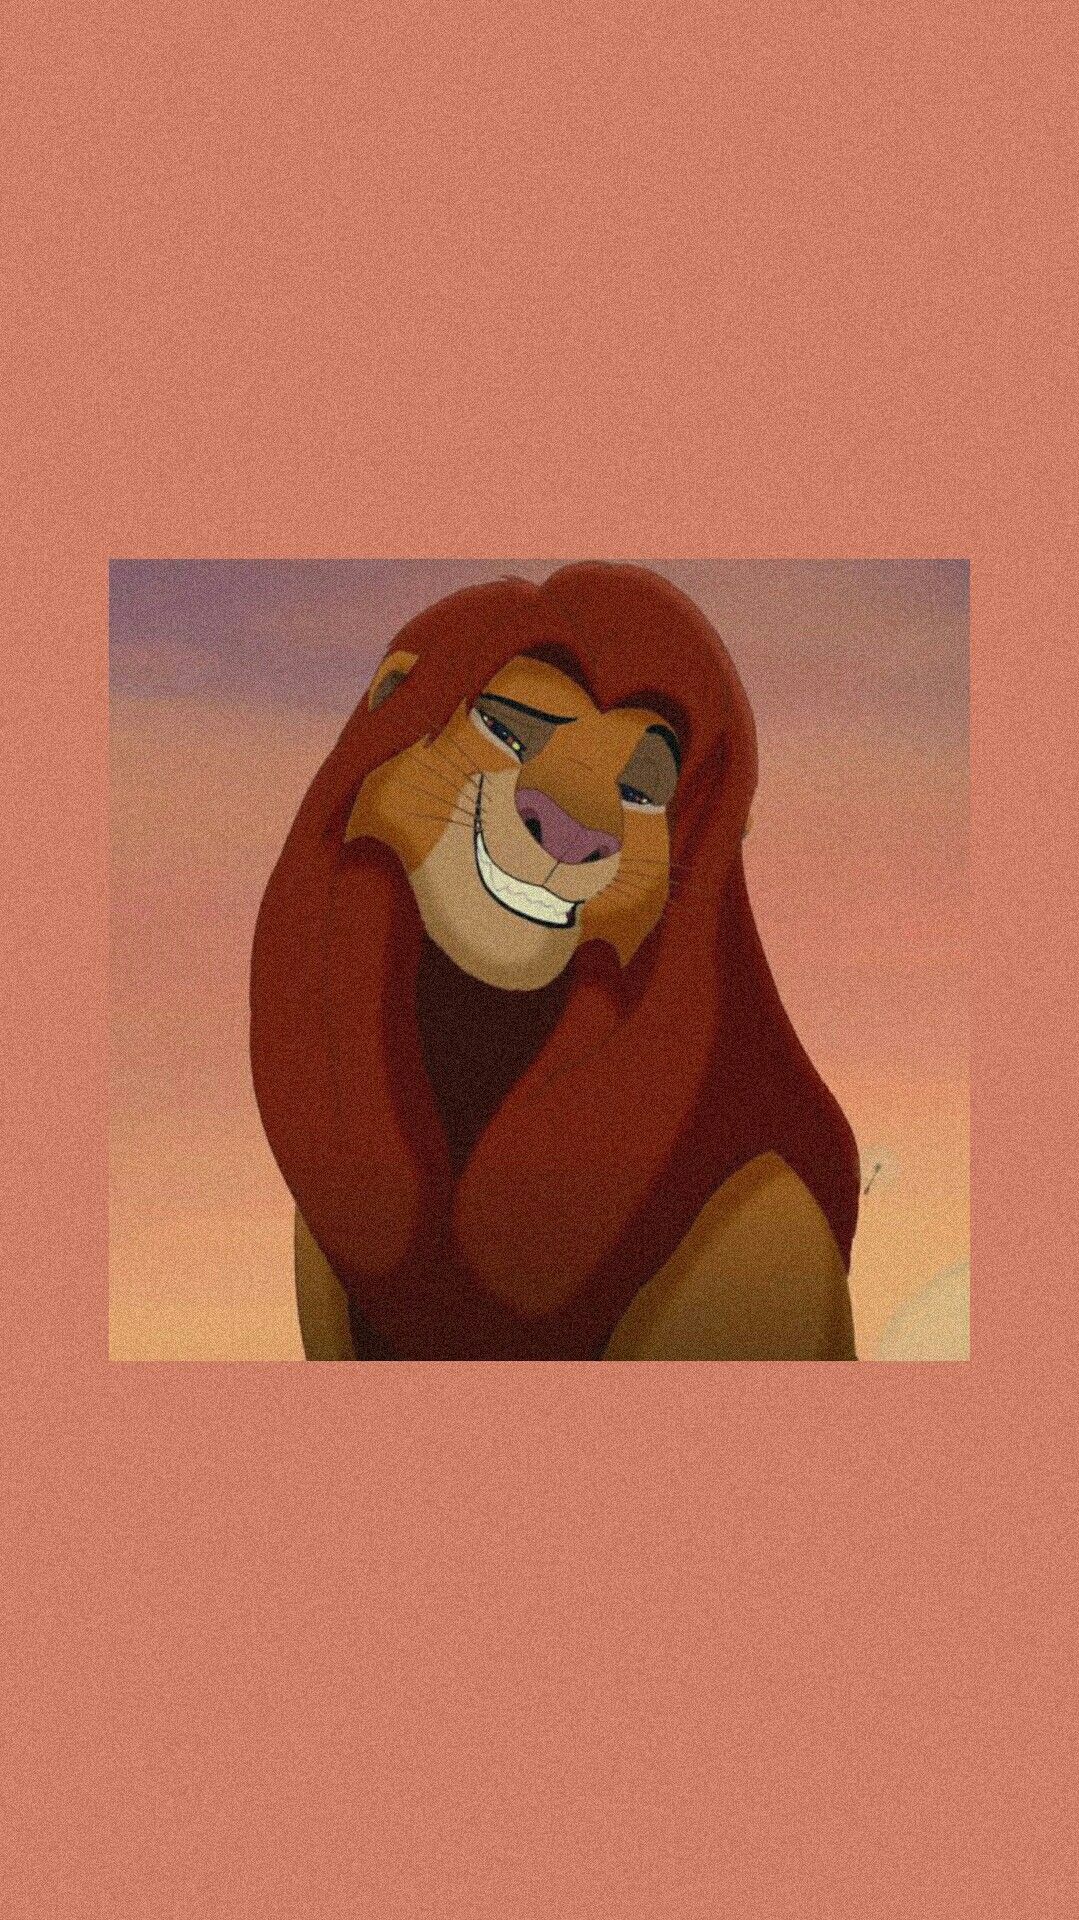 Rey leon. Lion king picture, Disney wallpaper, Animal kingdom disney